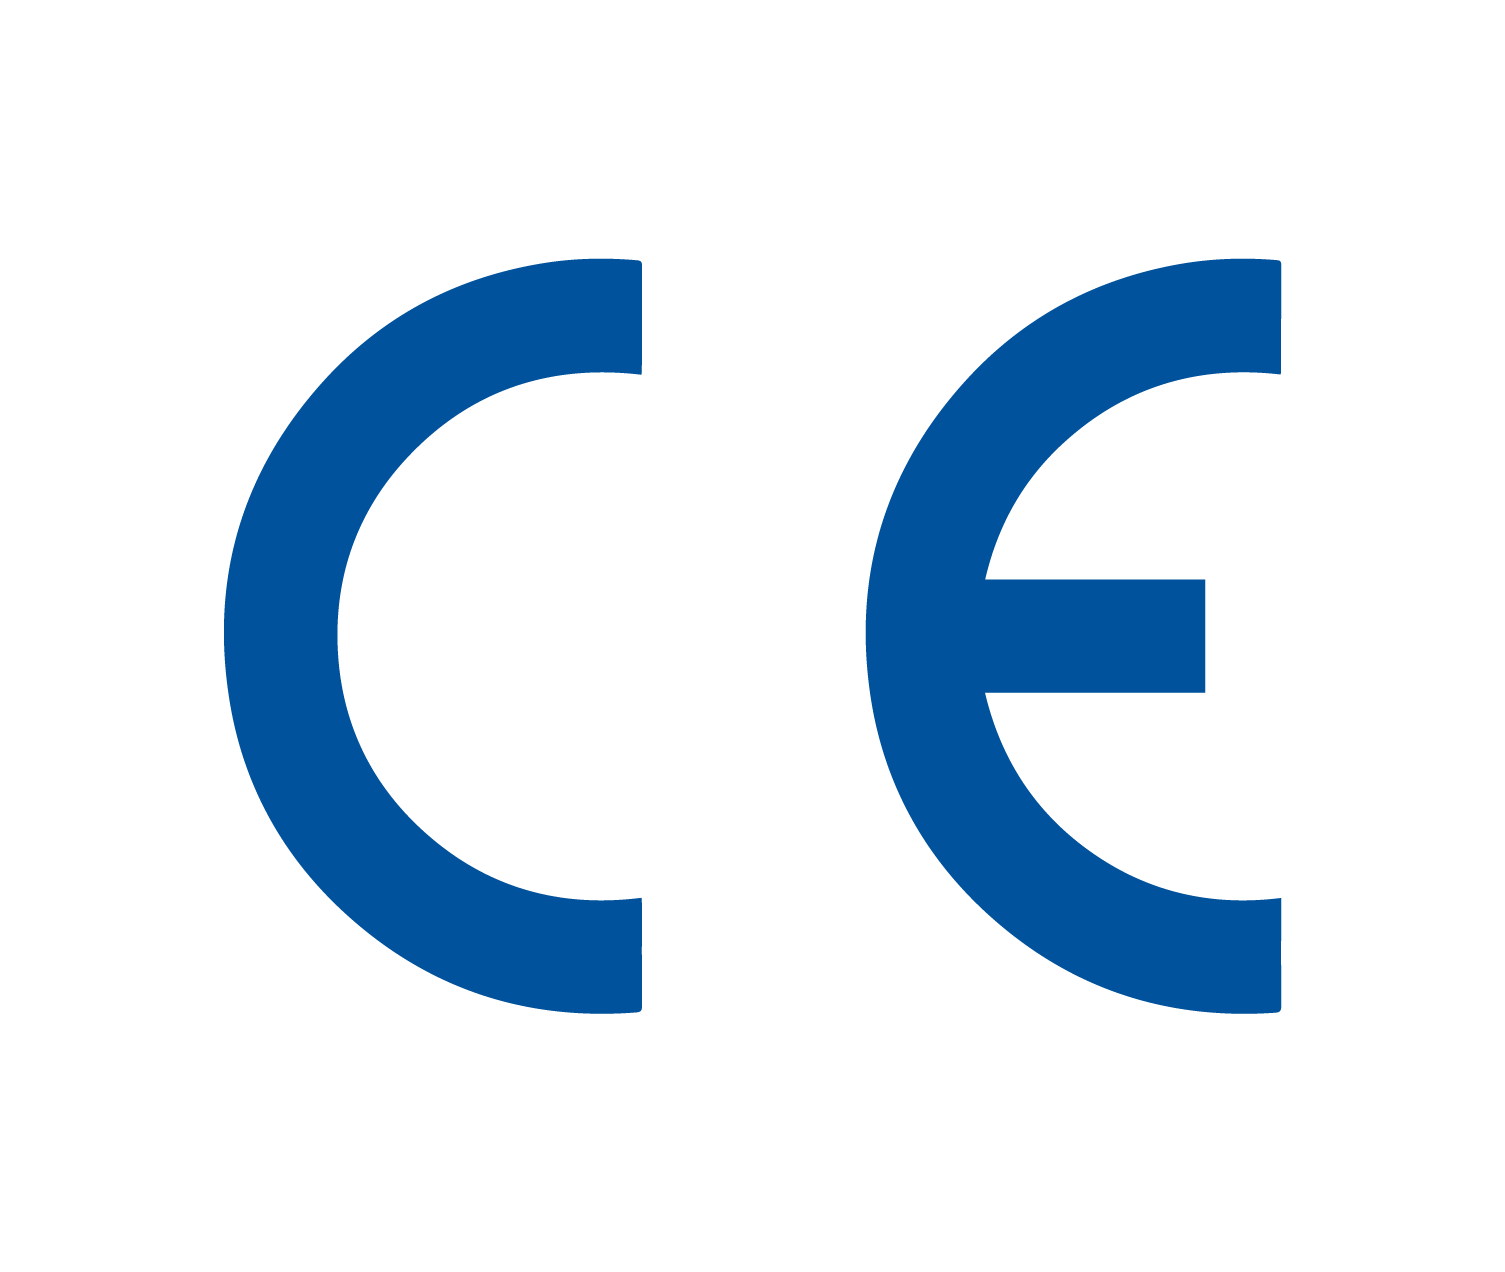 Augmento Enterprise has obtained CE marking